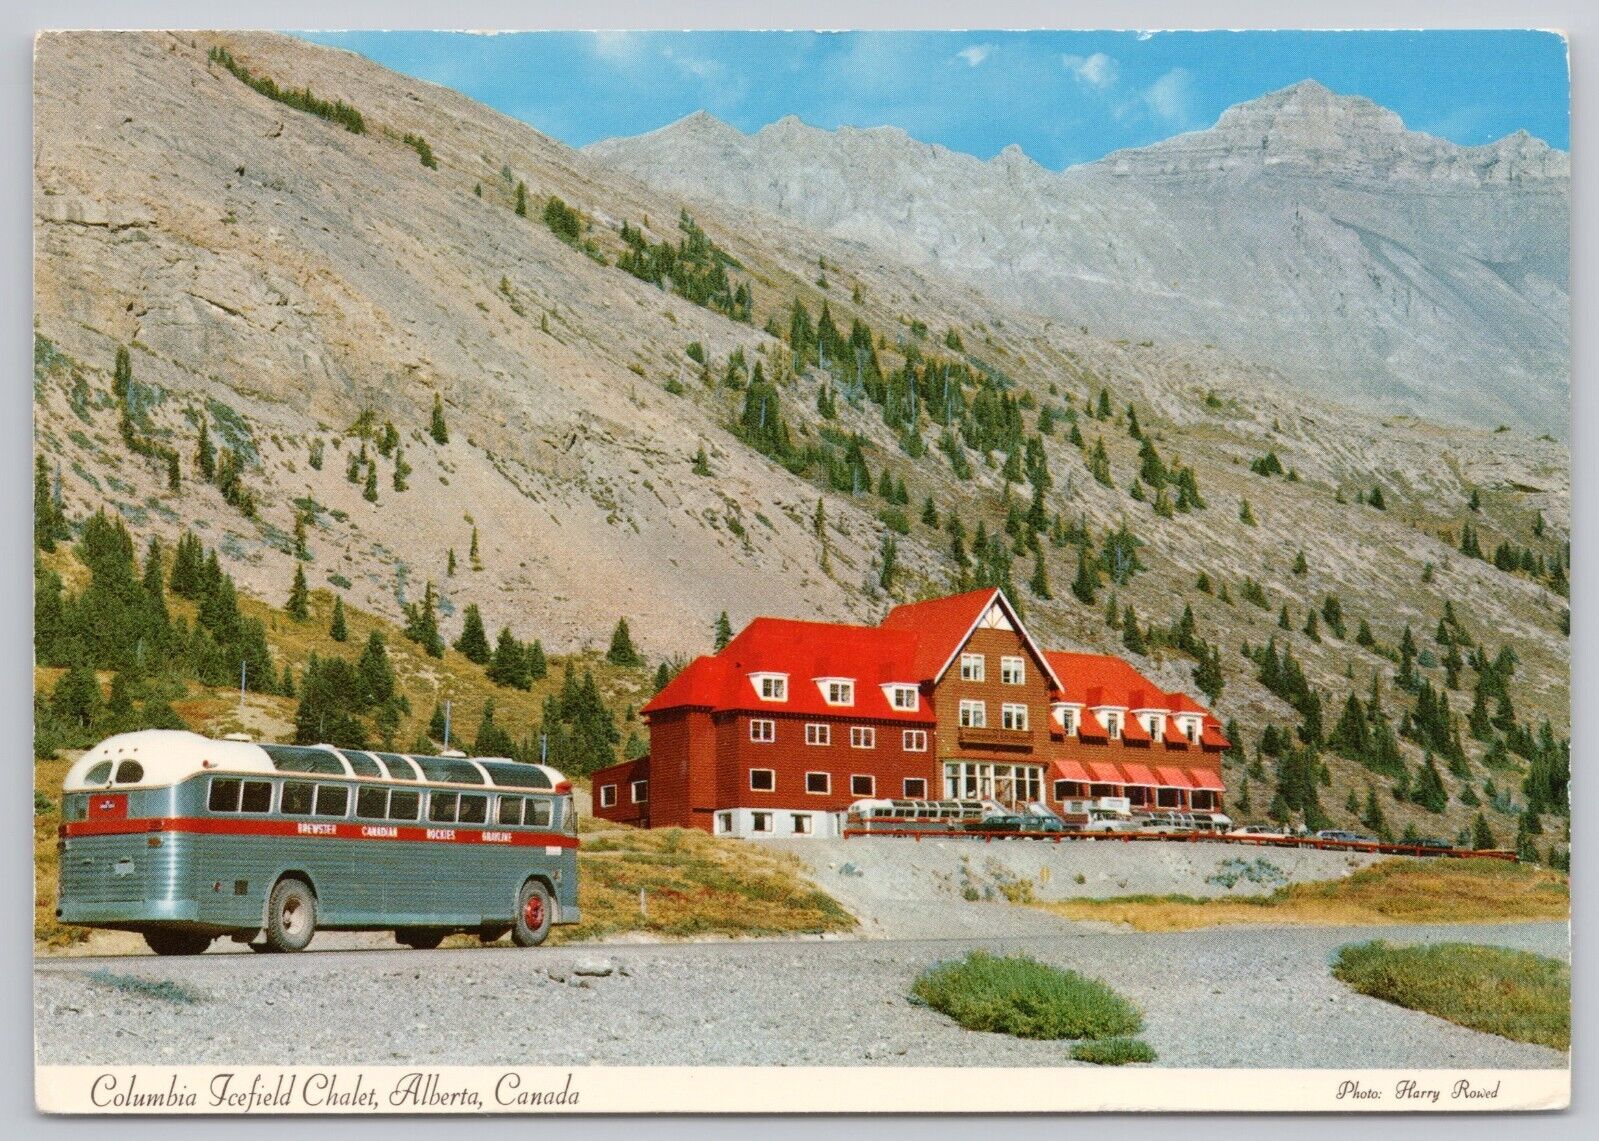 Jasper Alberta Canada, Columbia Icefield Chalet Old Tour Bus, Vintage Postcard